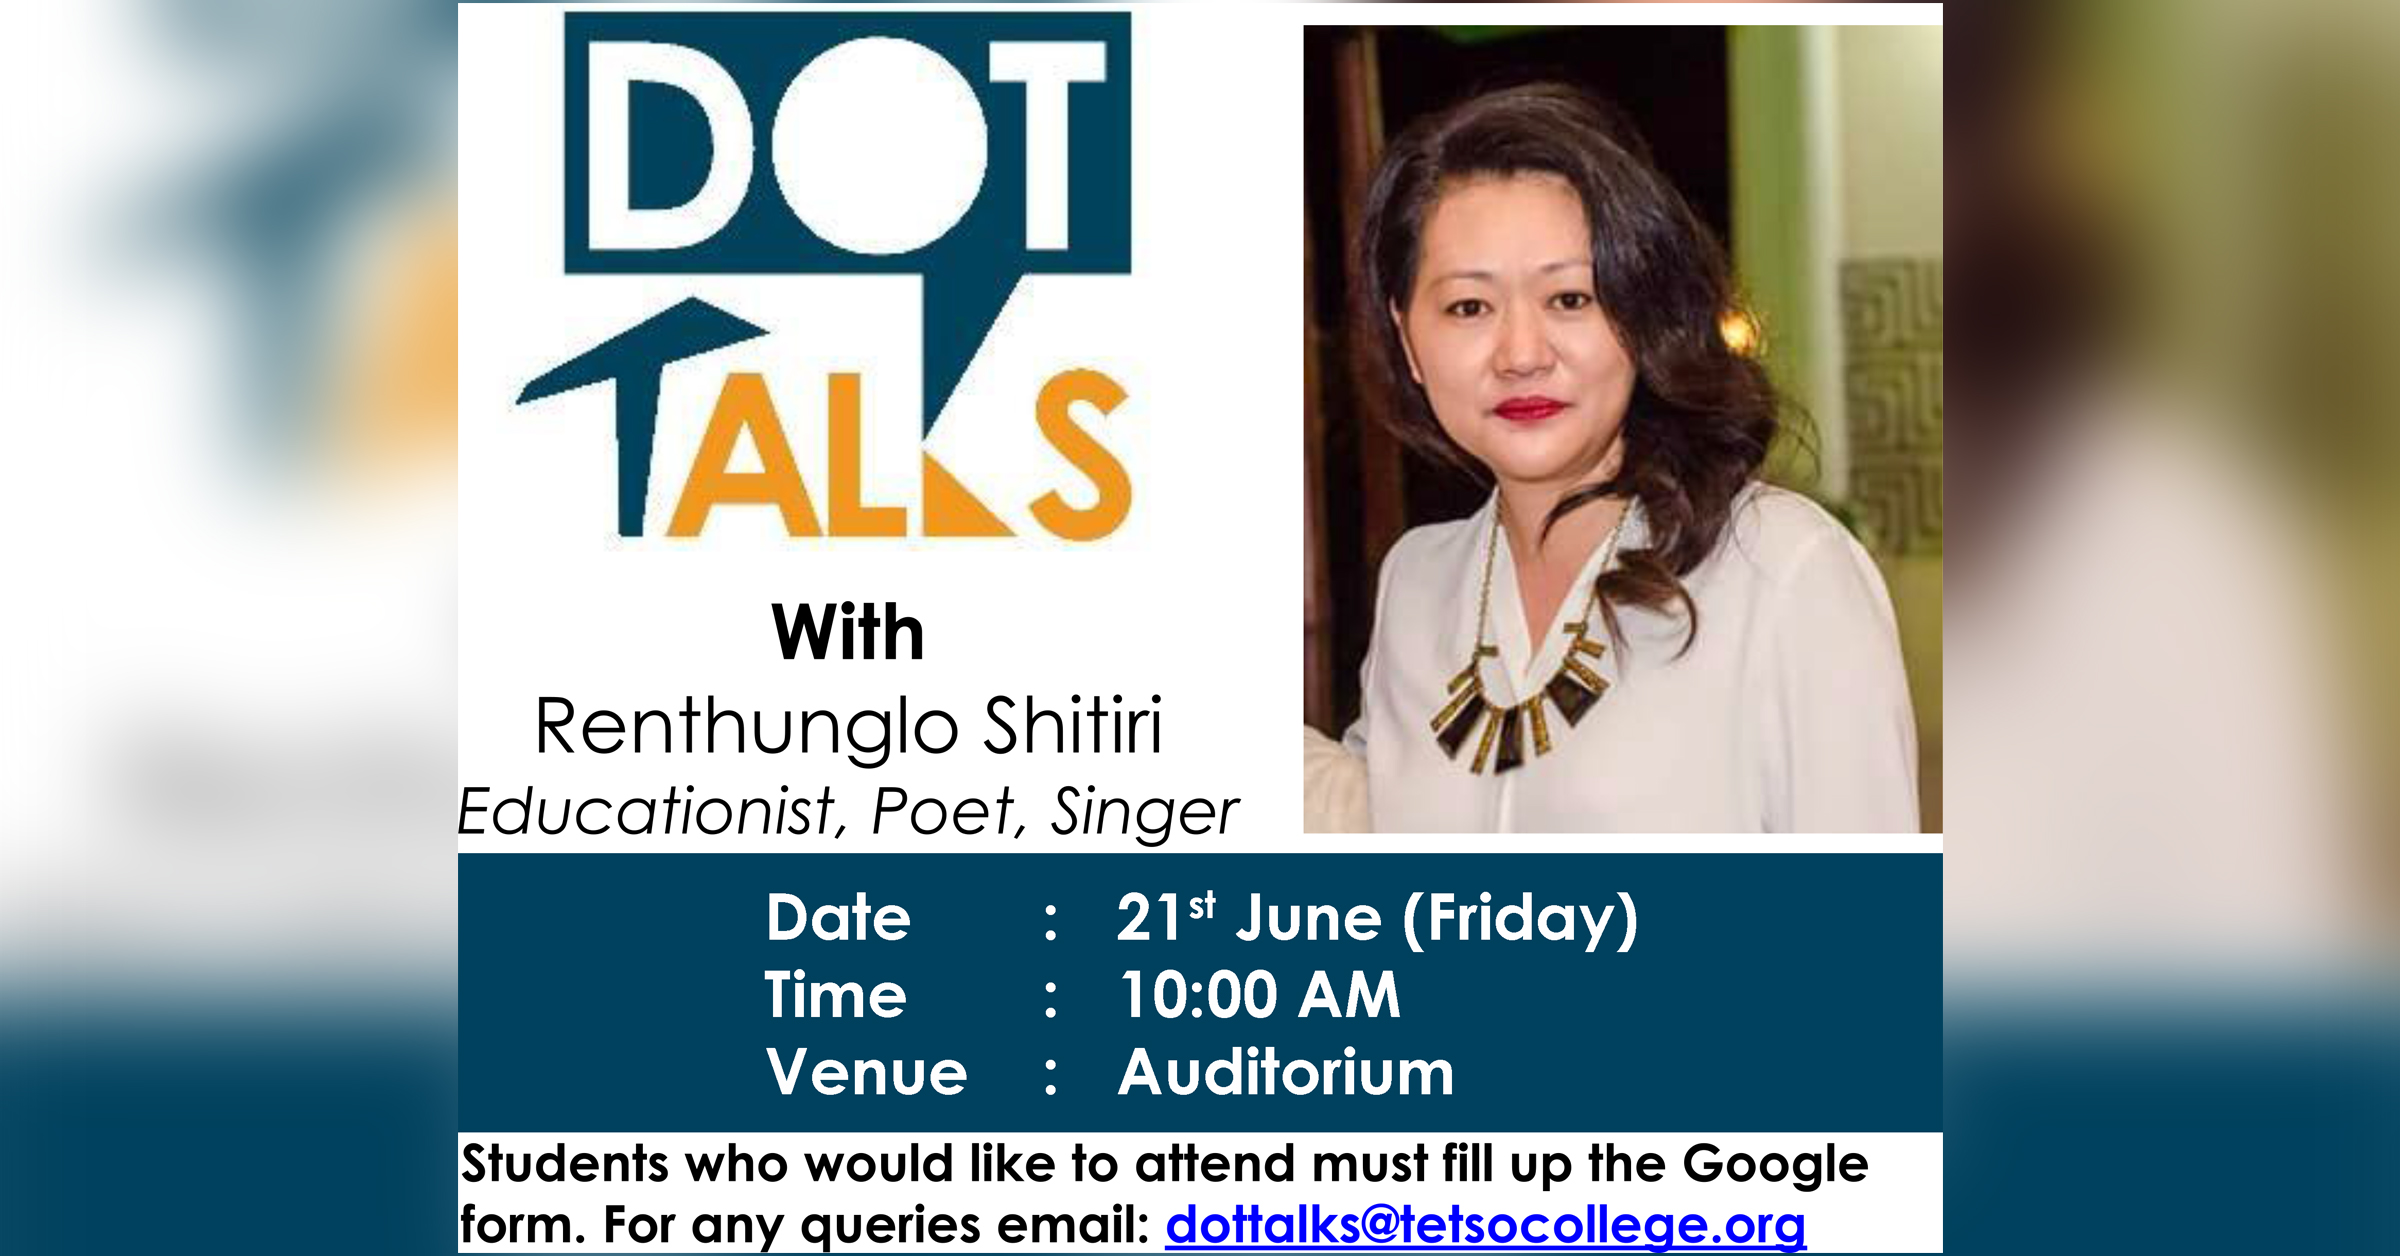 DOT Talks with Renthunglo Shitiri